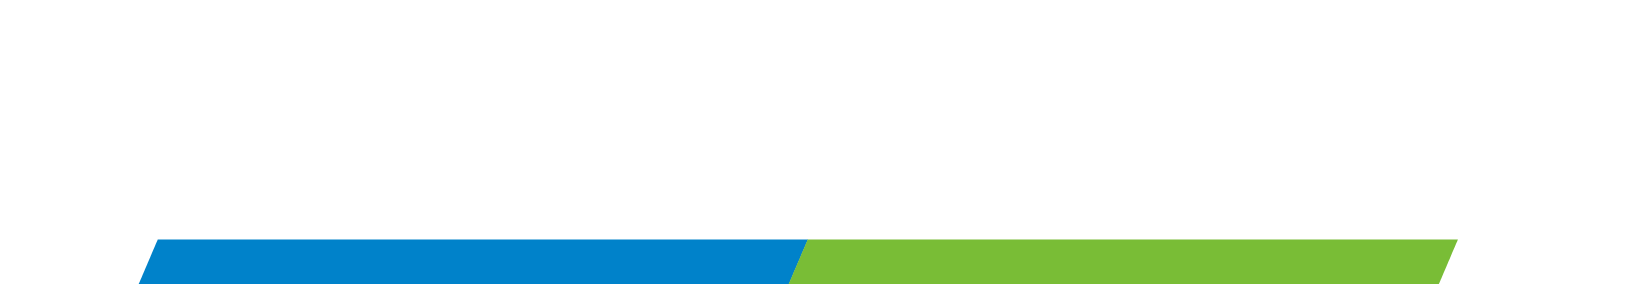 Sega Sammy Holdings logo grand pour les fonds sombres (PNG transparent)